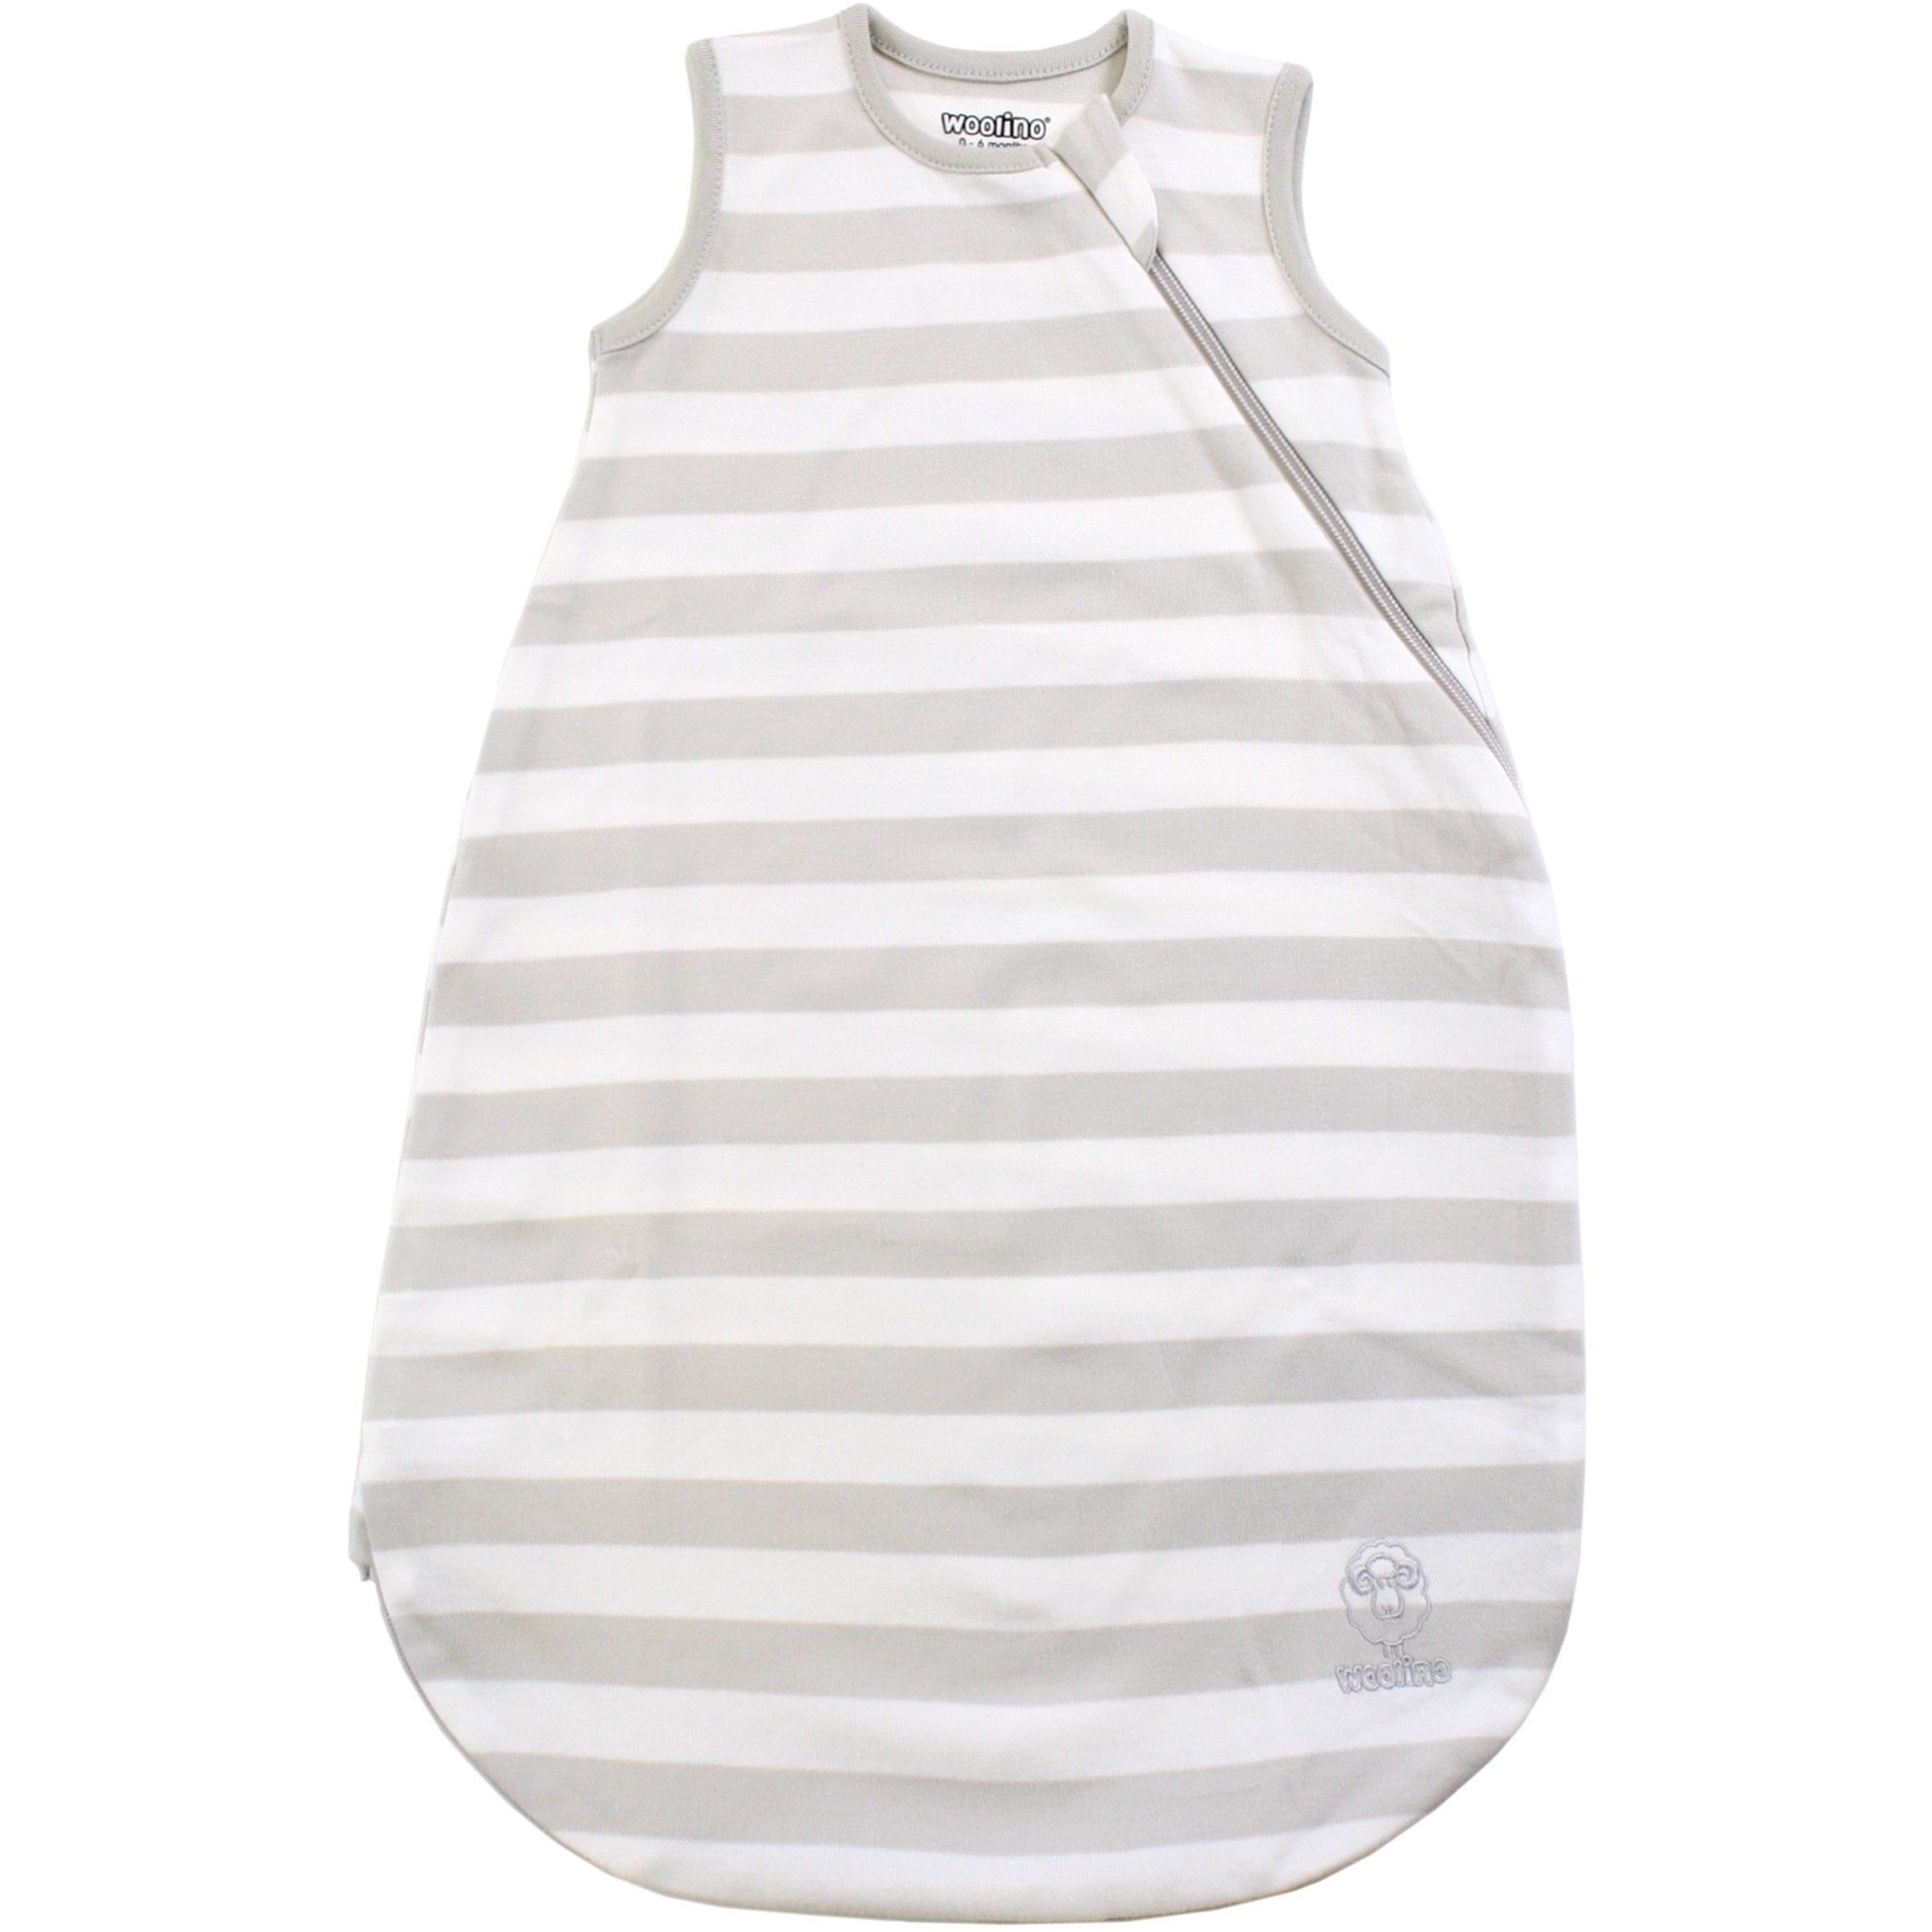 Woolino - Organic Cotton Baby Sleep Bag 